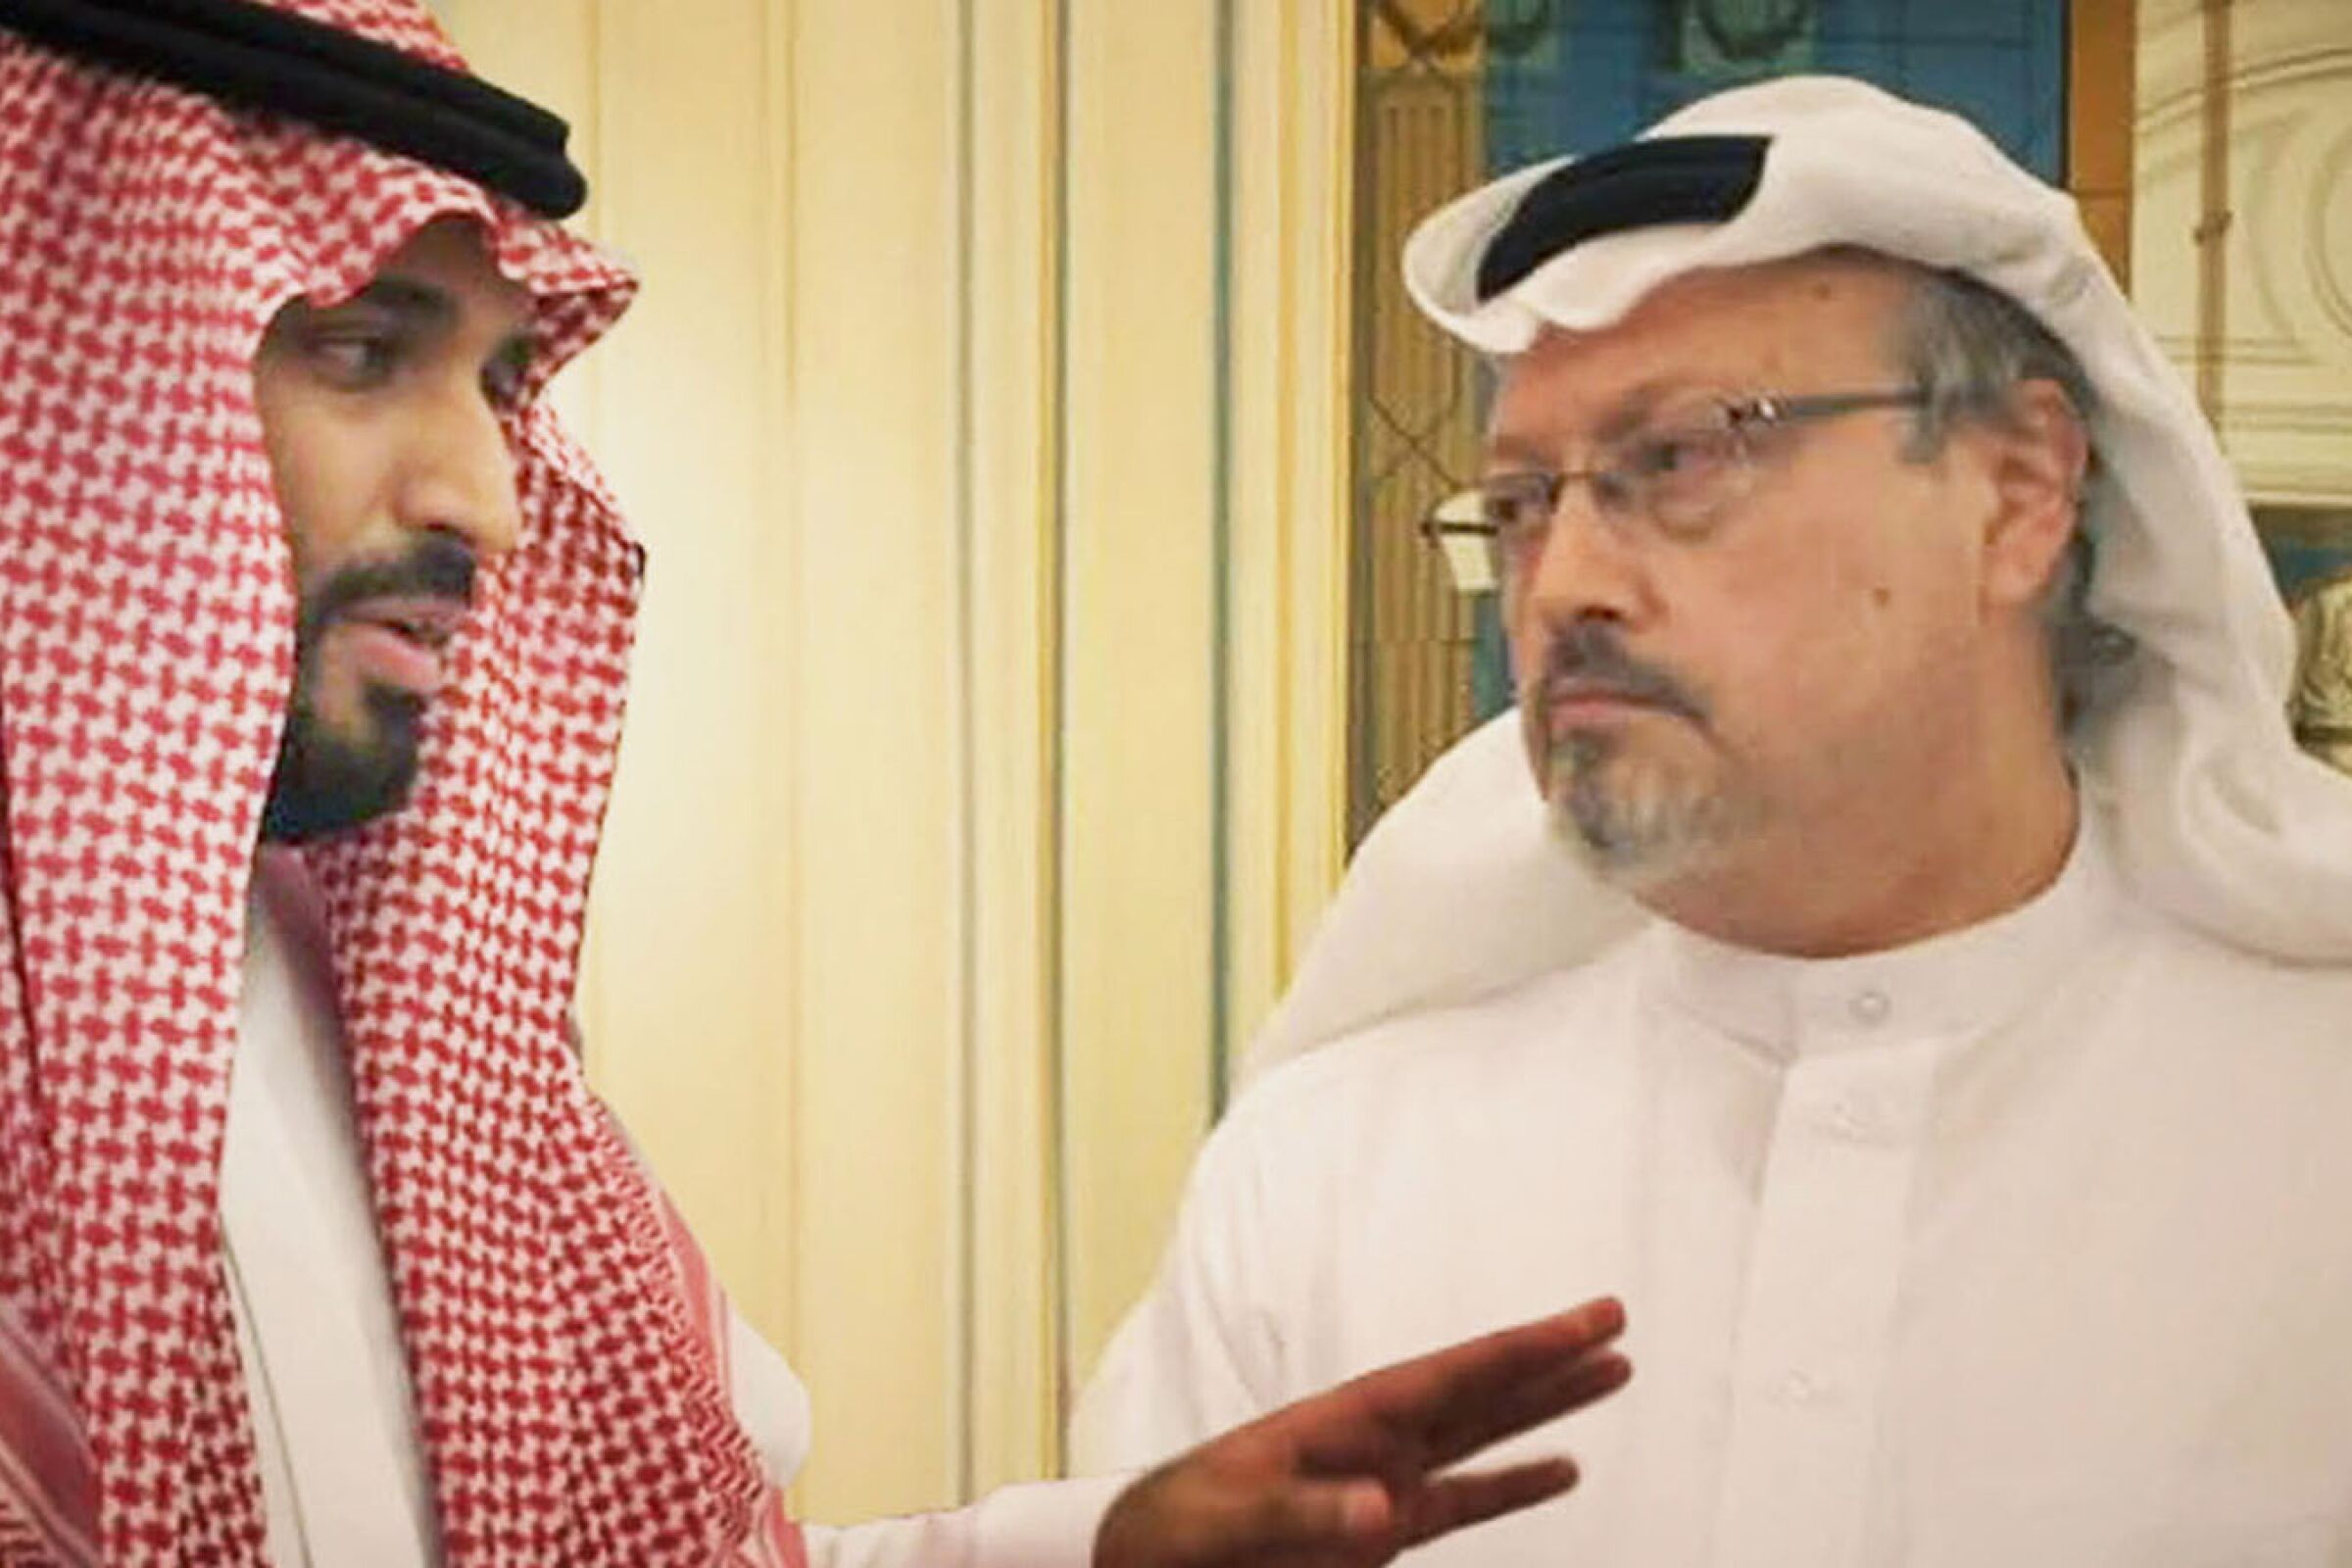 Saudi Crown Prince Mohammed bin Salman, left, and journalist Jamal Khashoggi in the documentary "The Dissident."